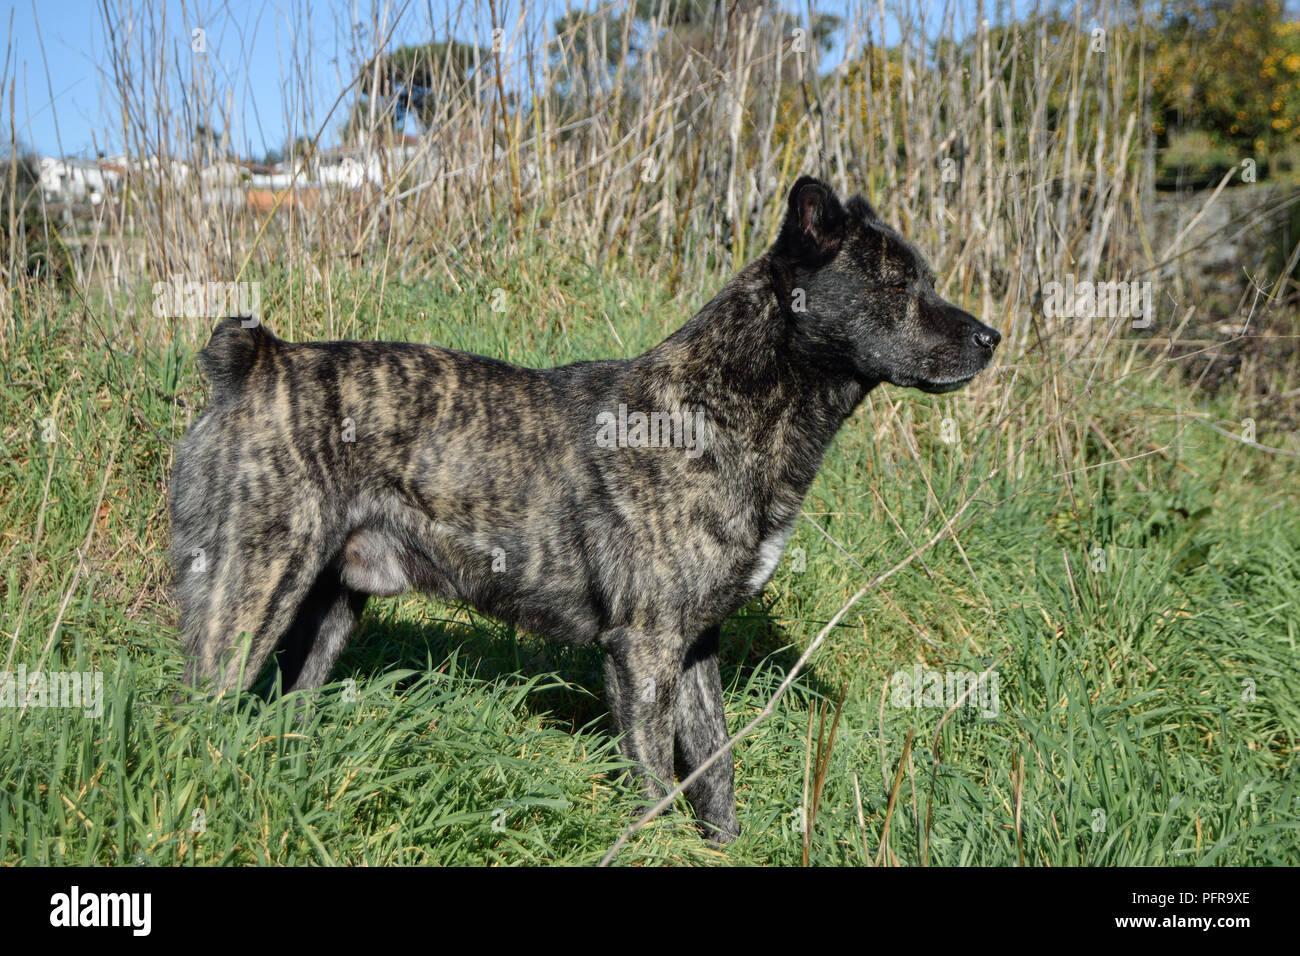 Cão Fila de São Miguel Dog Breed Information, Pictures, Characteristics &  Facts